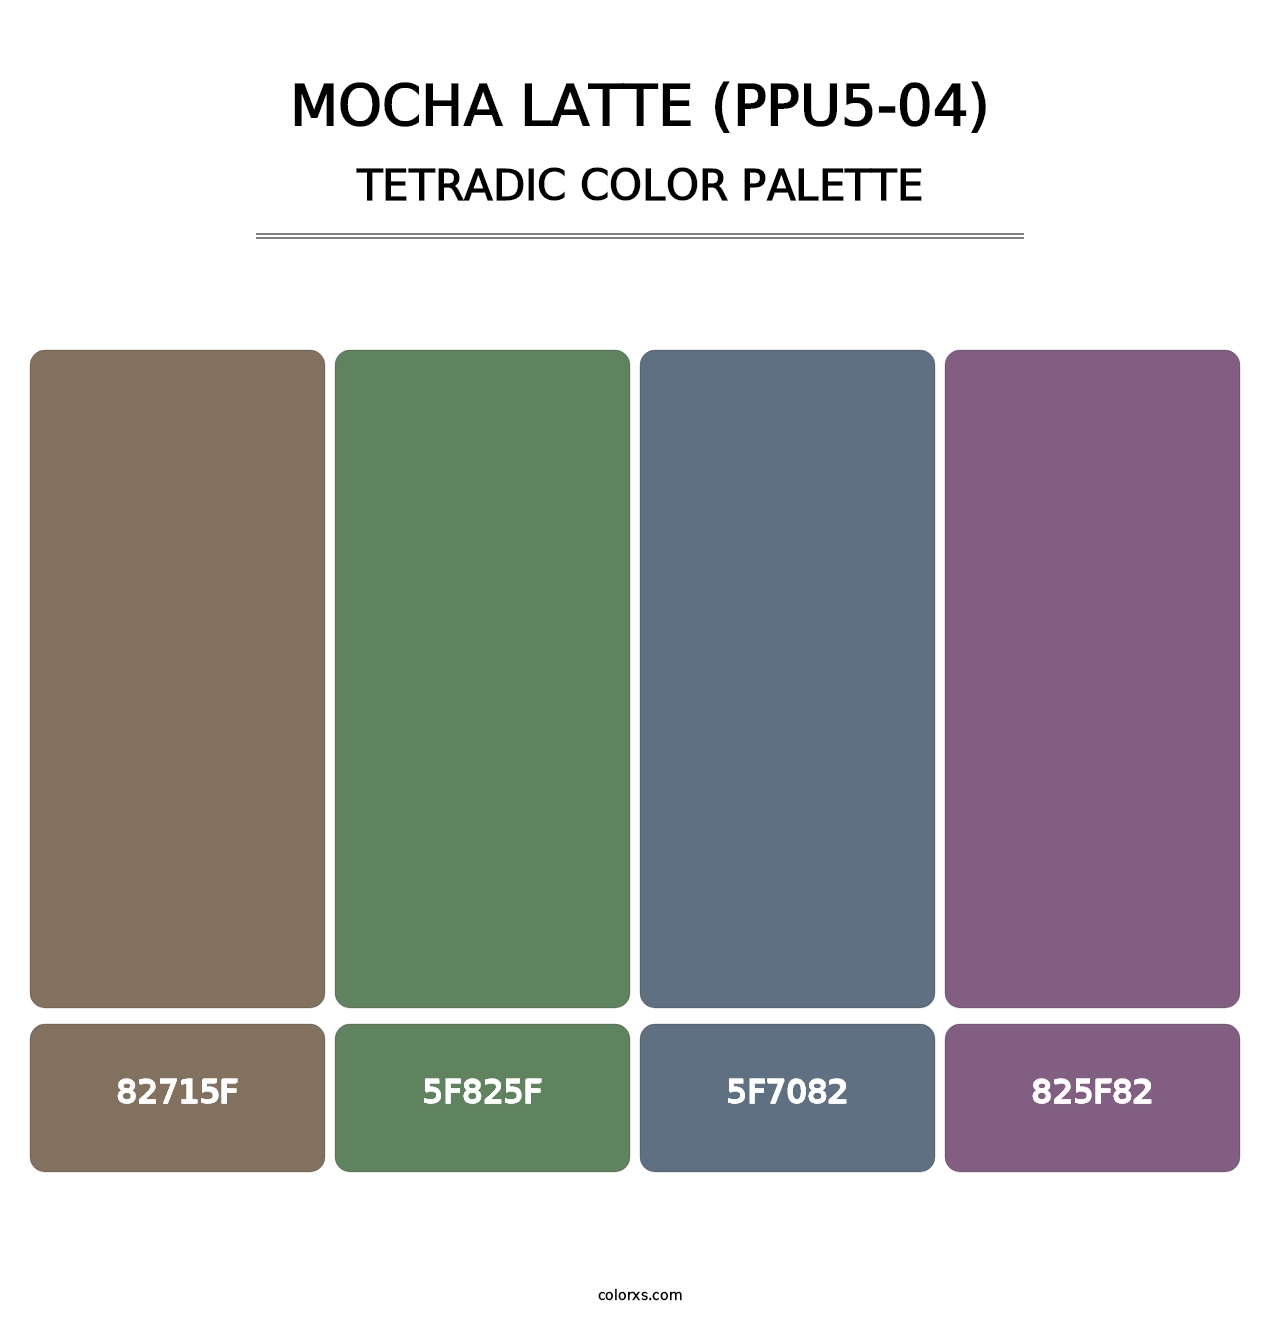 Mocha Latte (PPU5-04) - Tetradic Color Palette